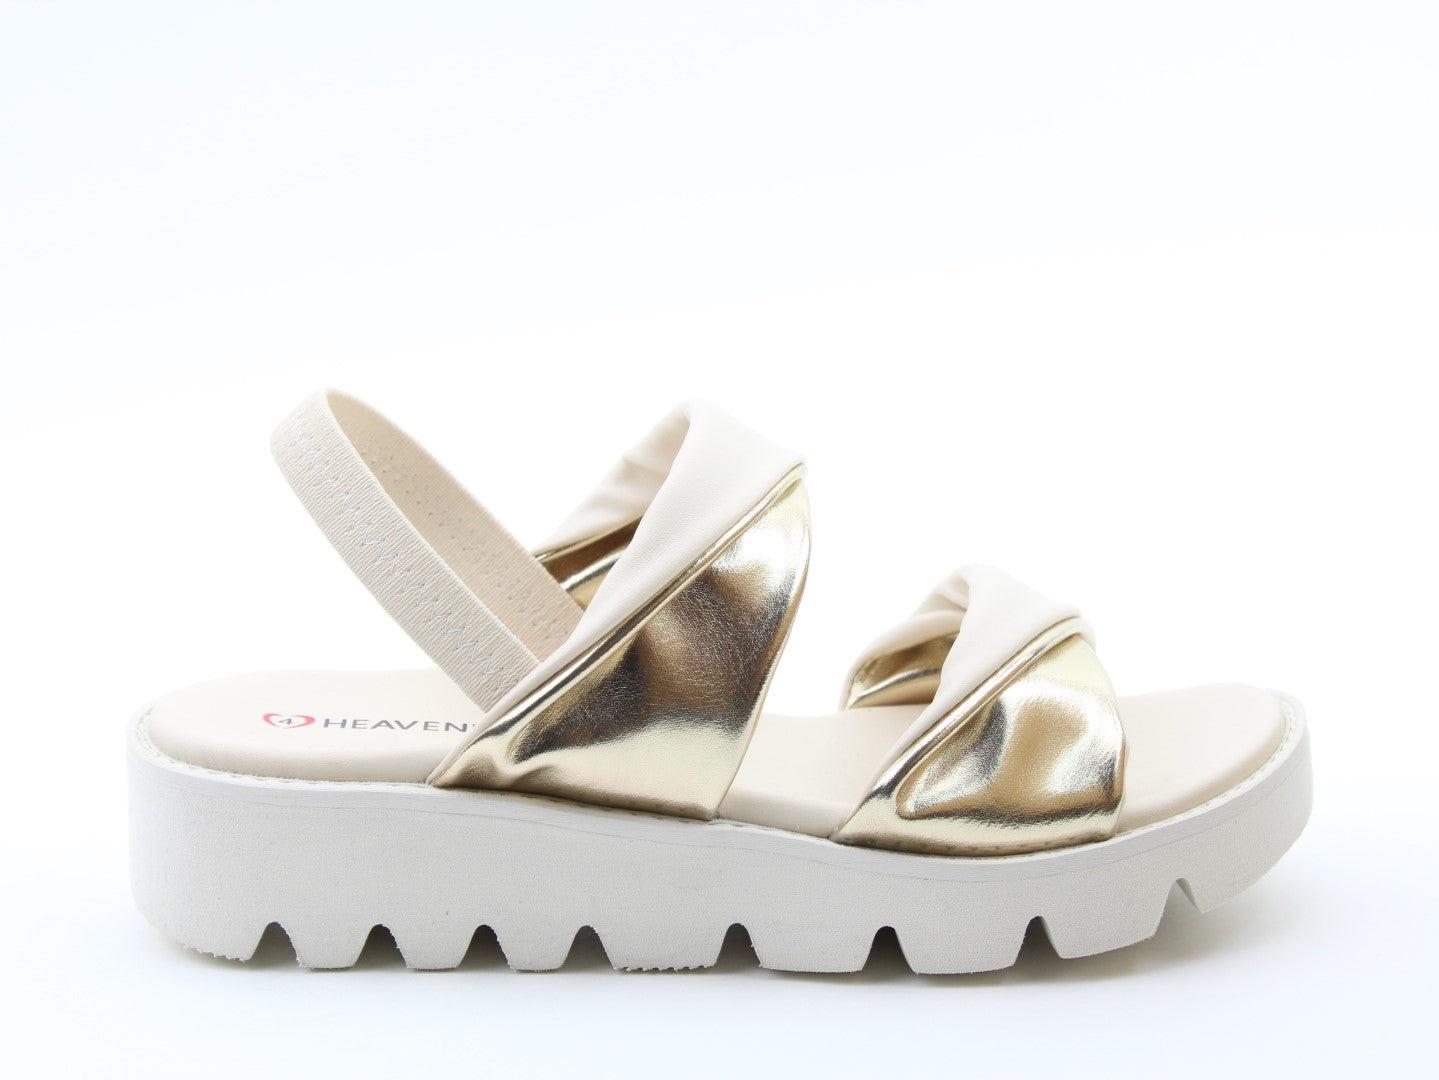 Heavenly Feet Ladies Stone/Gold Lightweight Vegan Platform Sandals